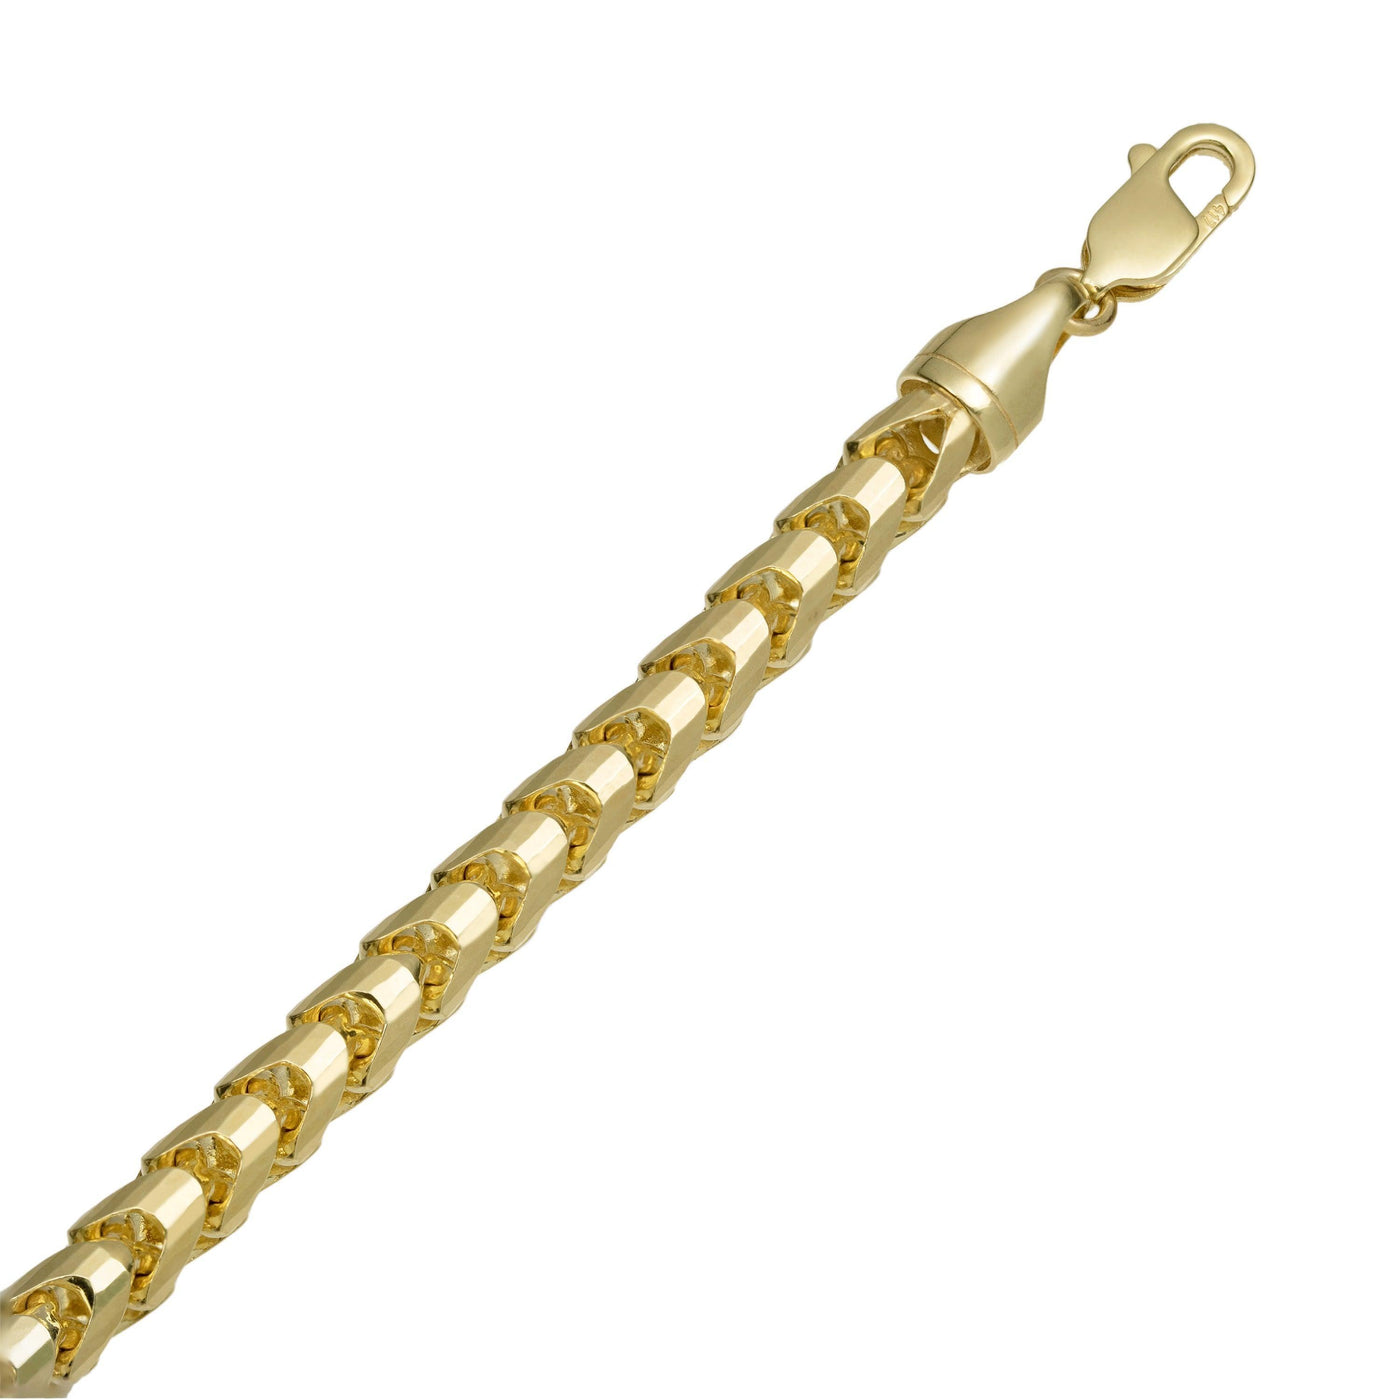 Franco Chain Bracelet 10K Yellow Gold - Solid - bayamjewelry